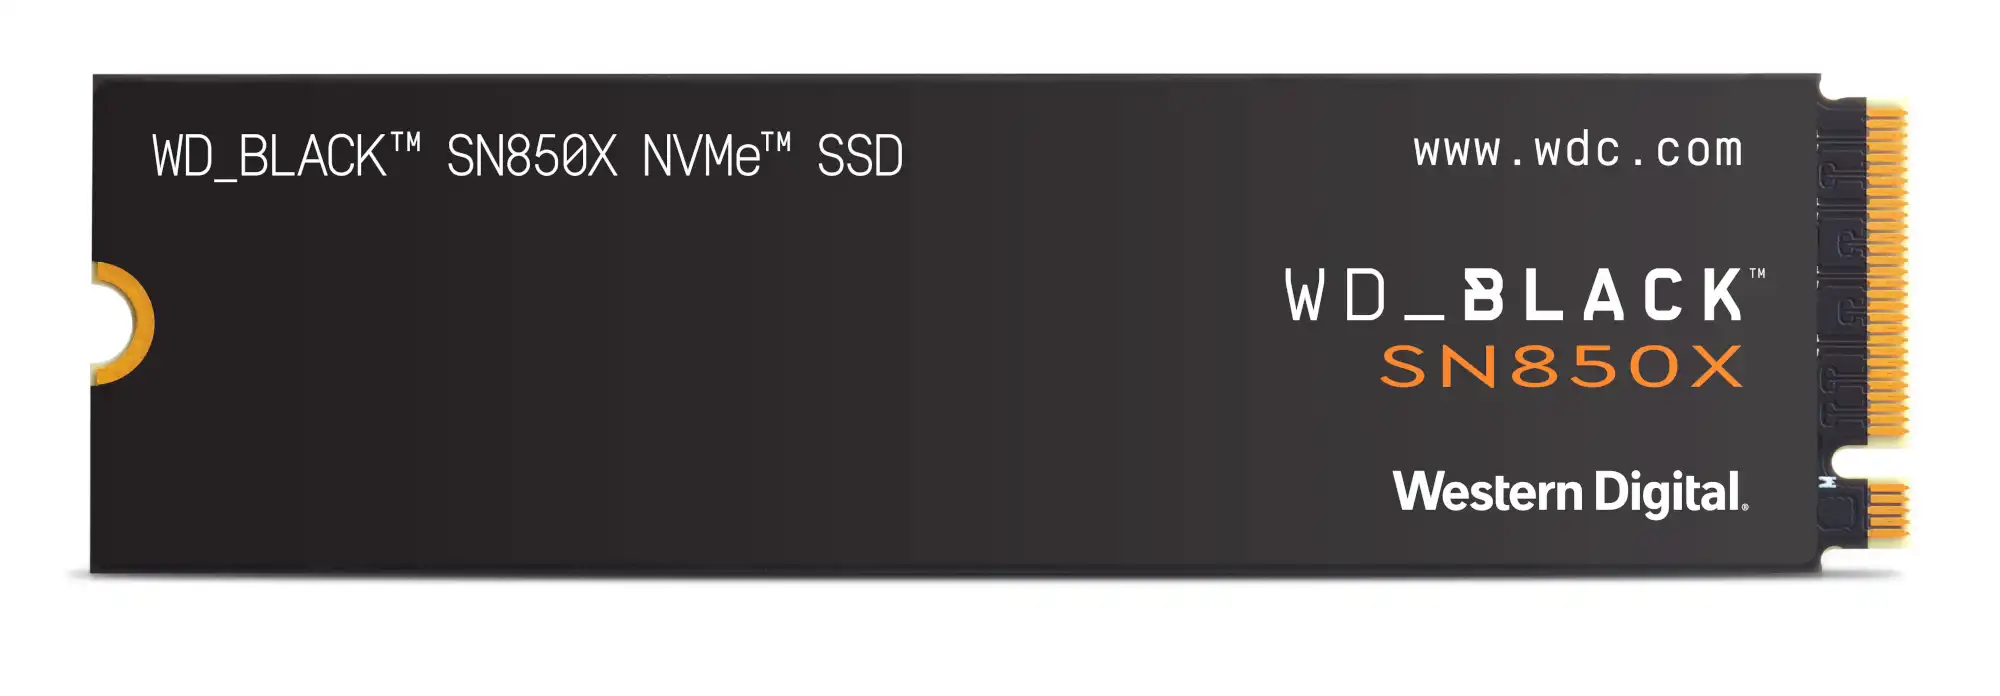 WD Black SN850X – بهترین PCIe 4.0 SSD دوم